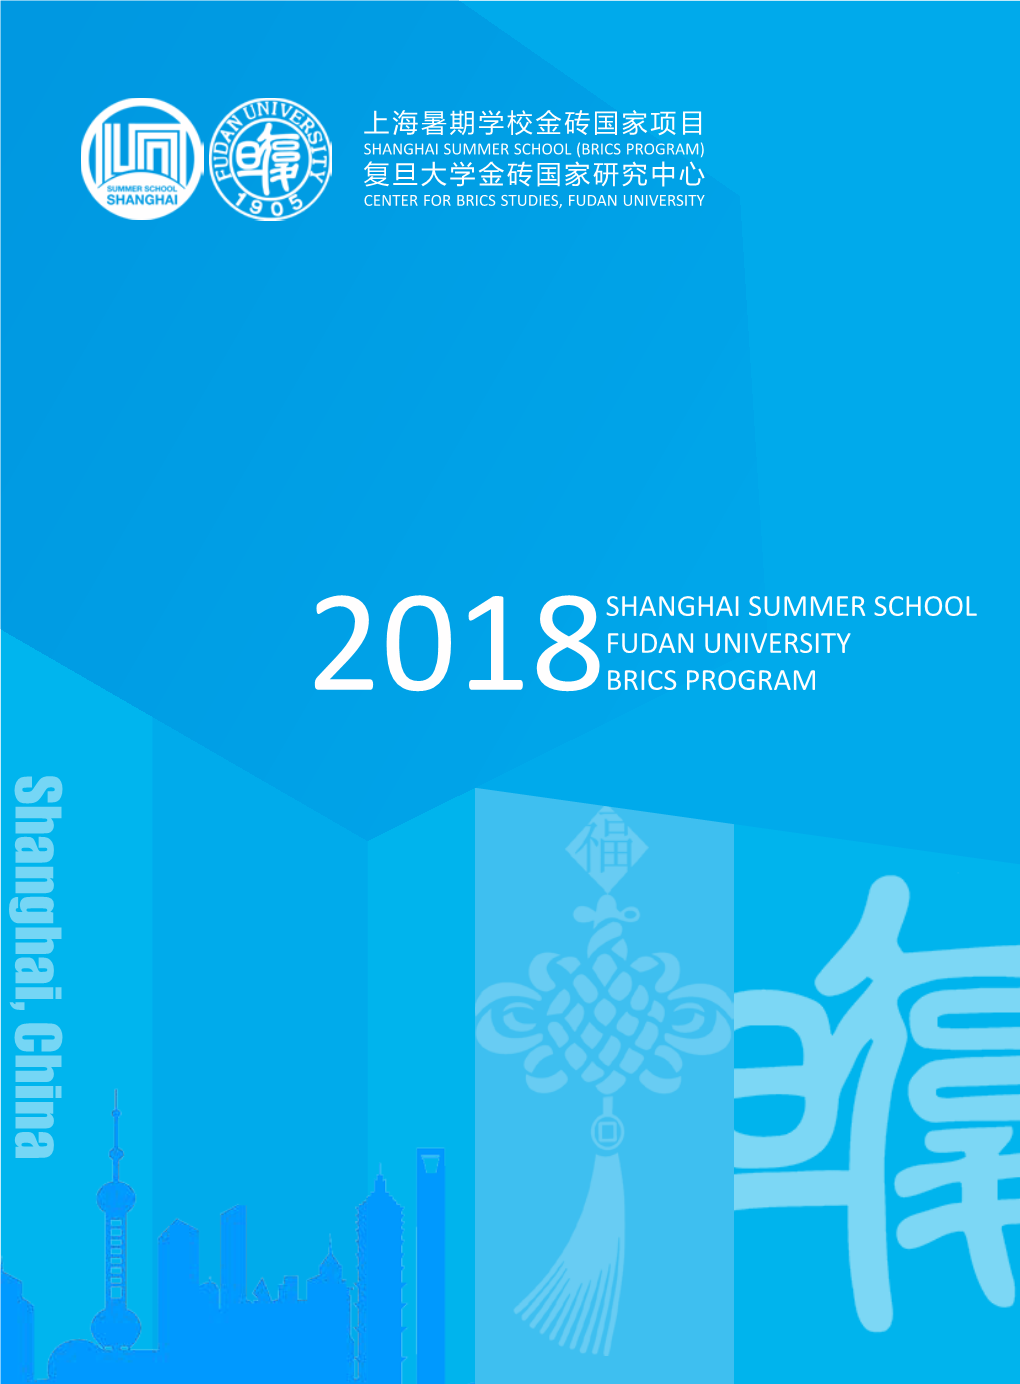 Shanghai, China SHANGHAI SUMMER SCHOOL FUDAN UNIVERSITY BRICS PROGRAM 2018